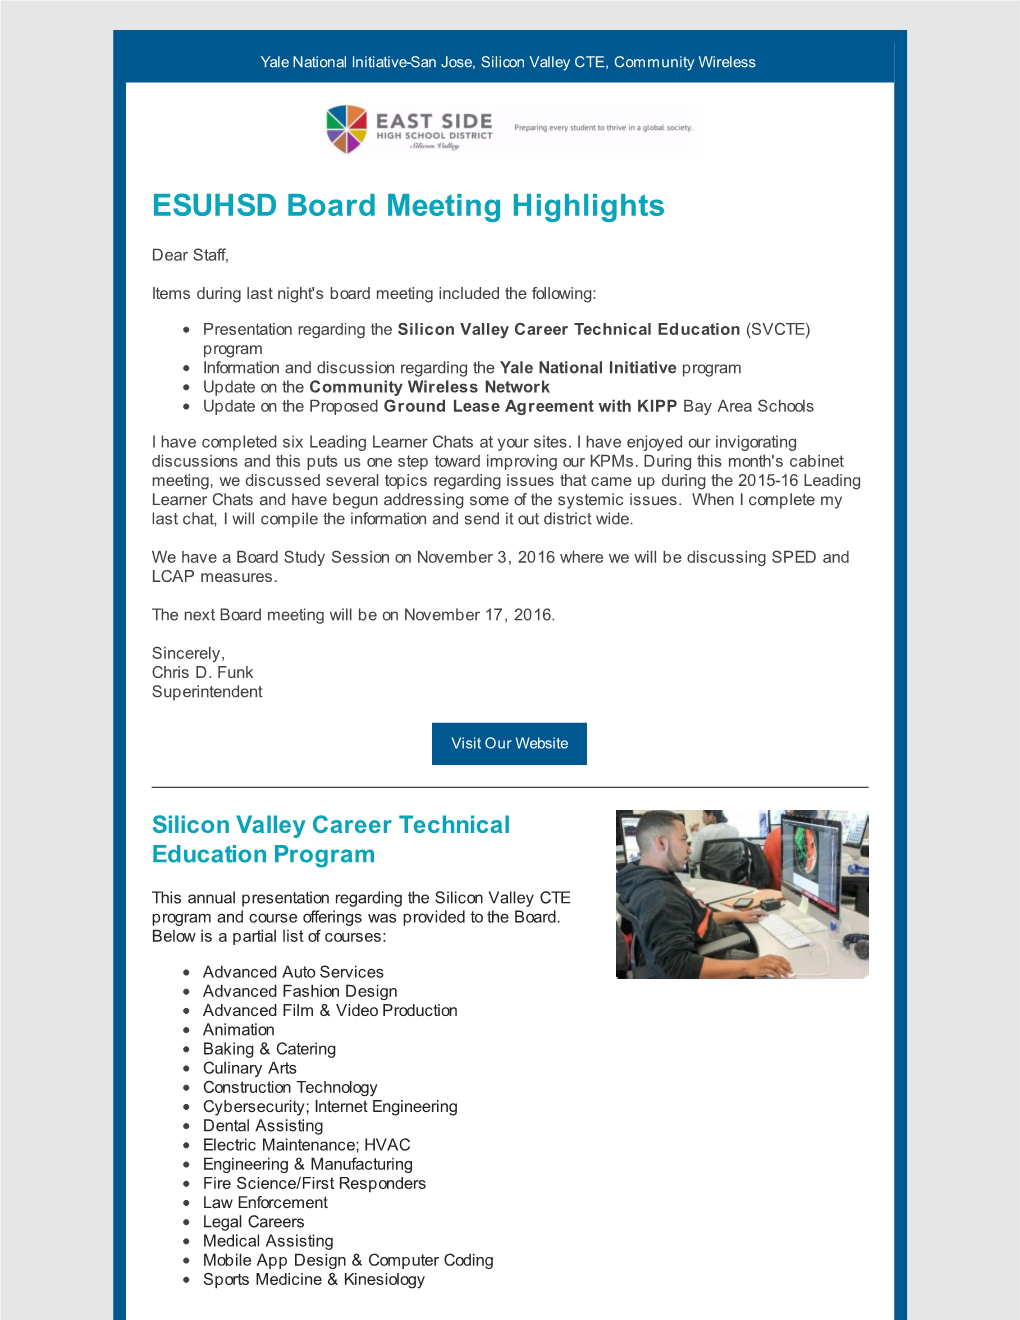 ESUHSD Board Meeting Highlights